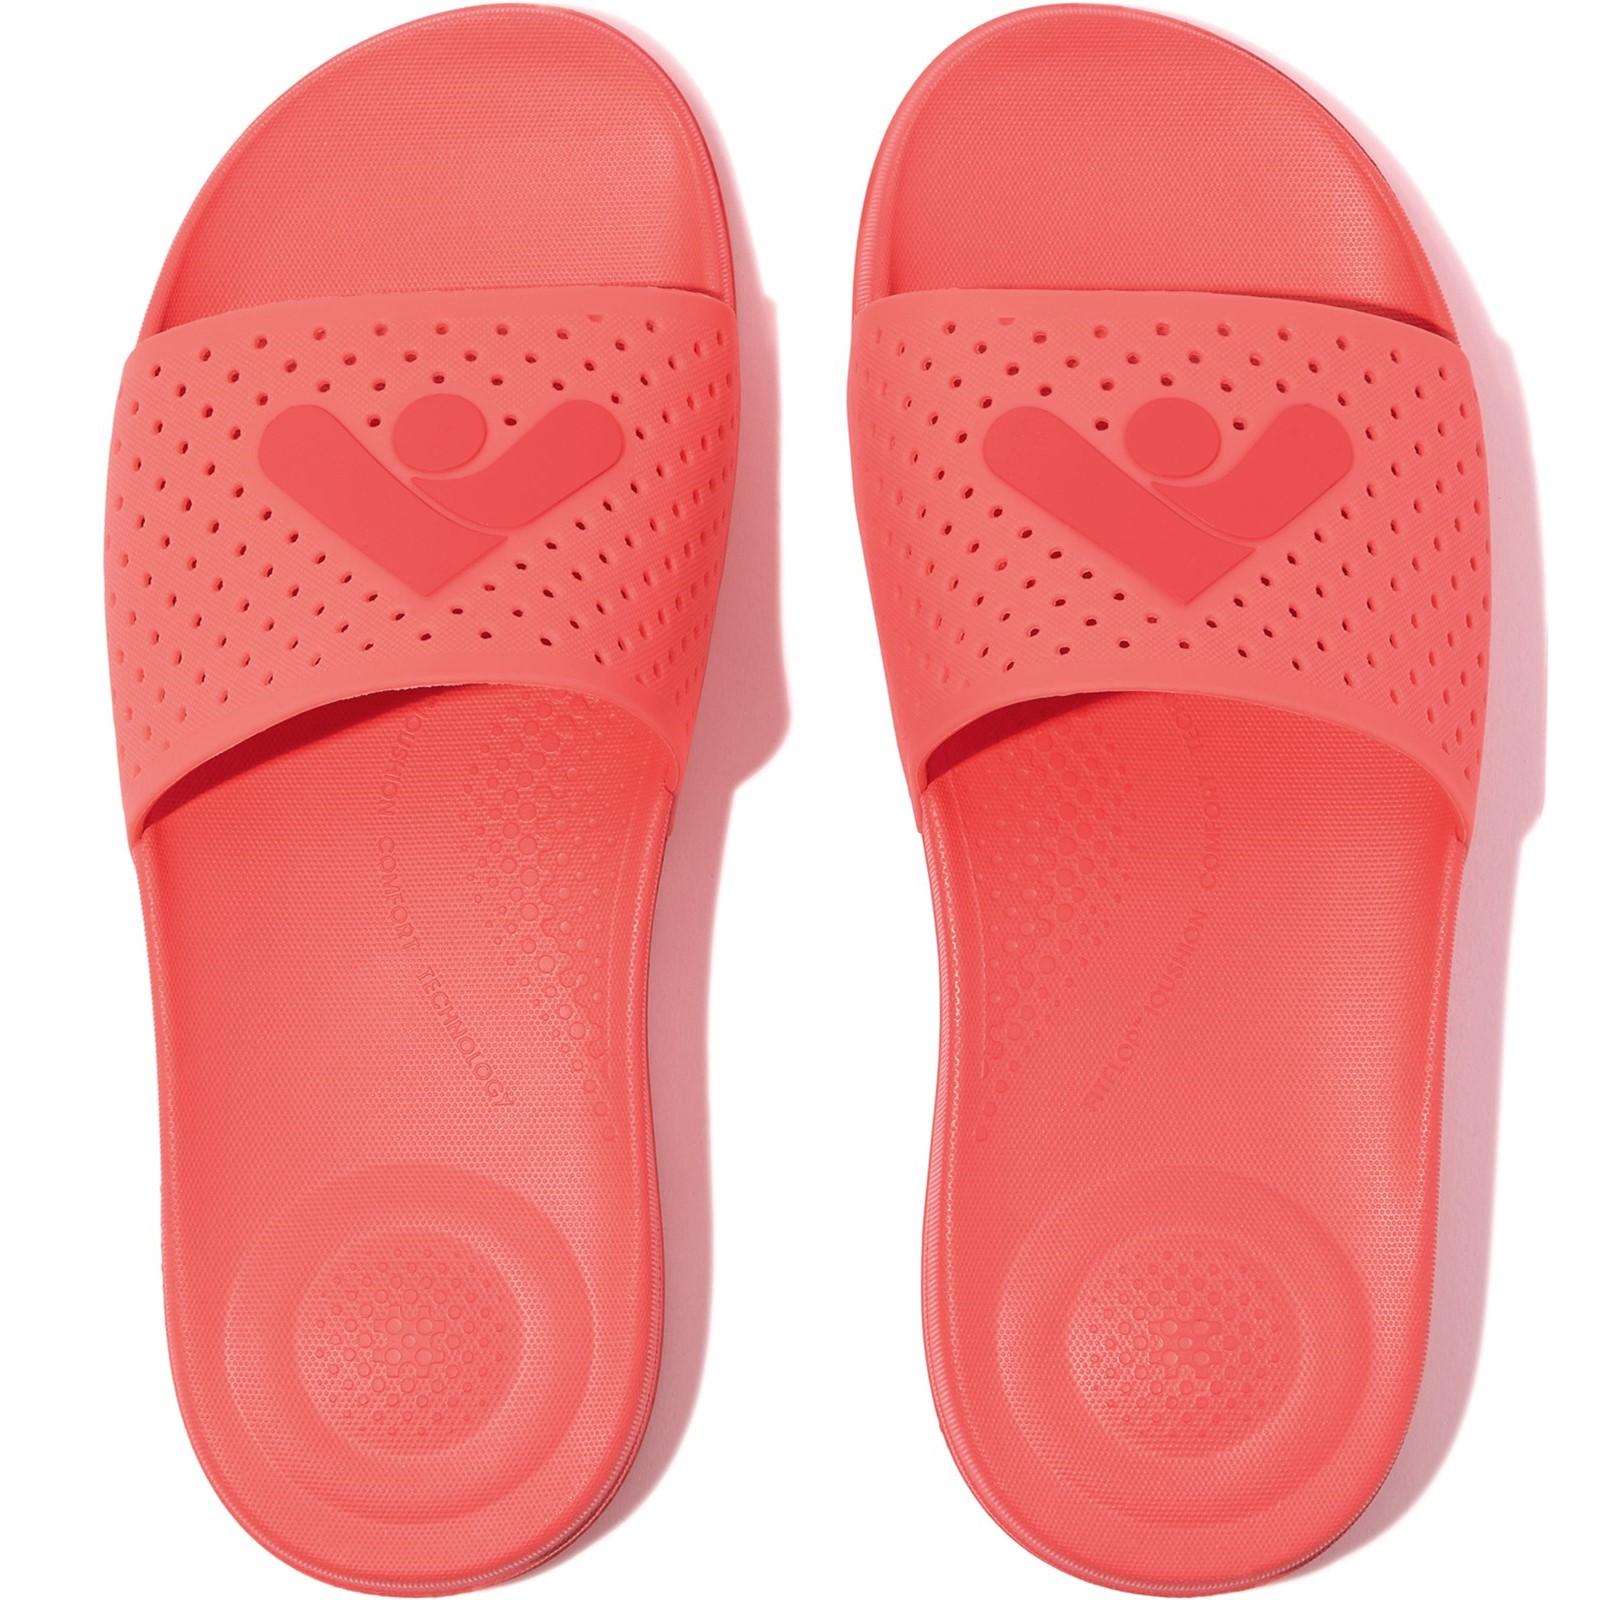 Fitflop iQushion Arrow Slides Sandals